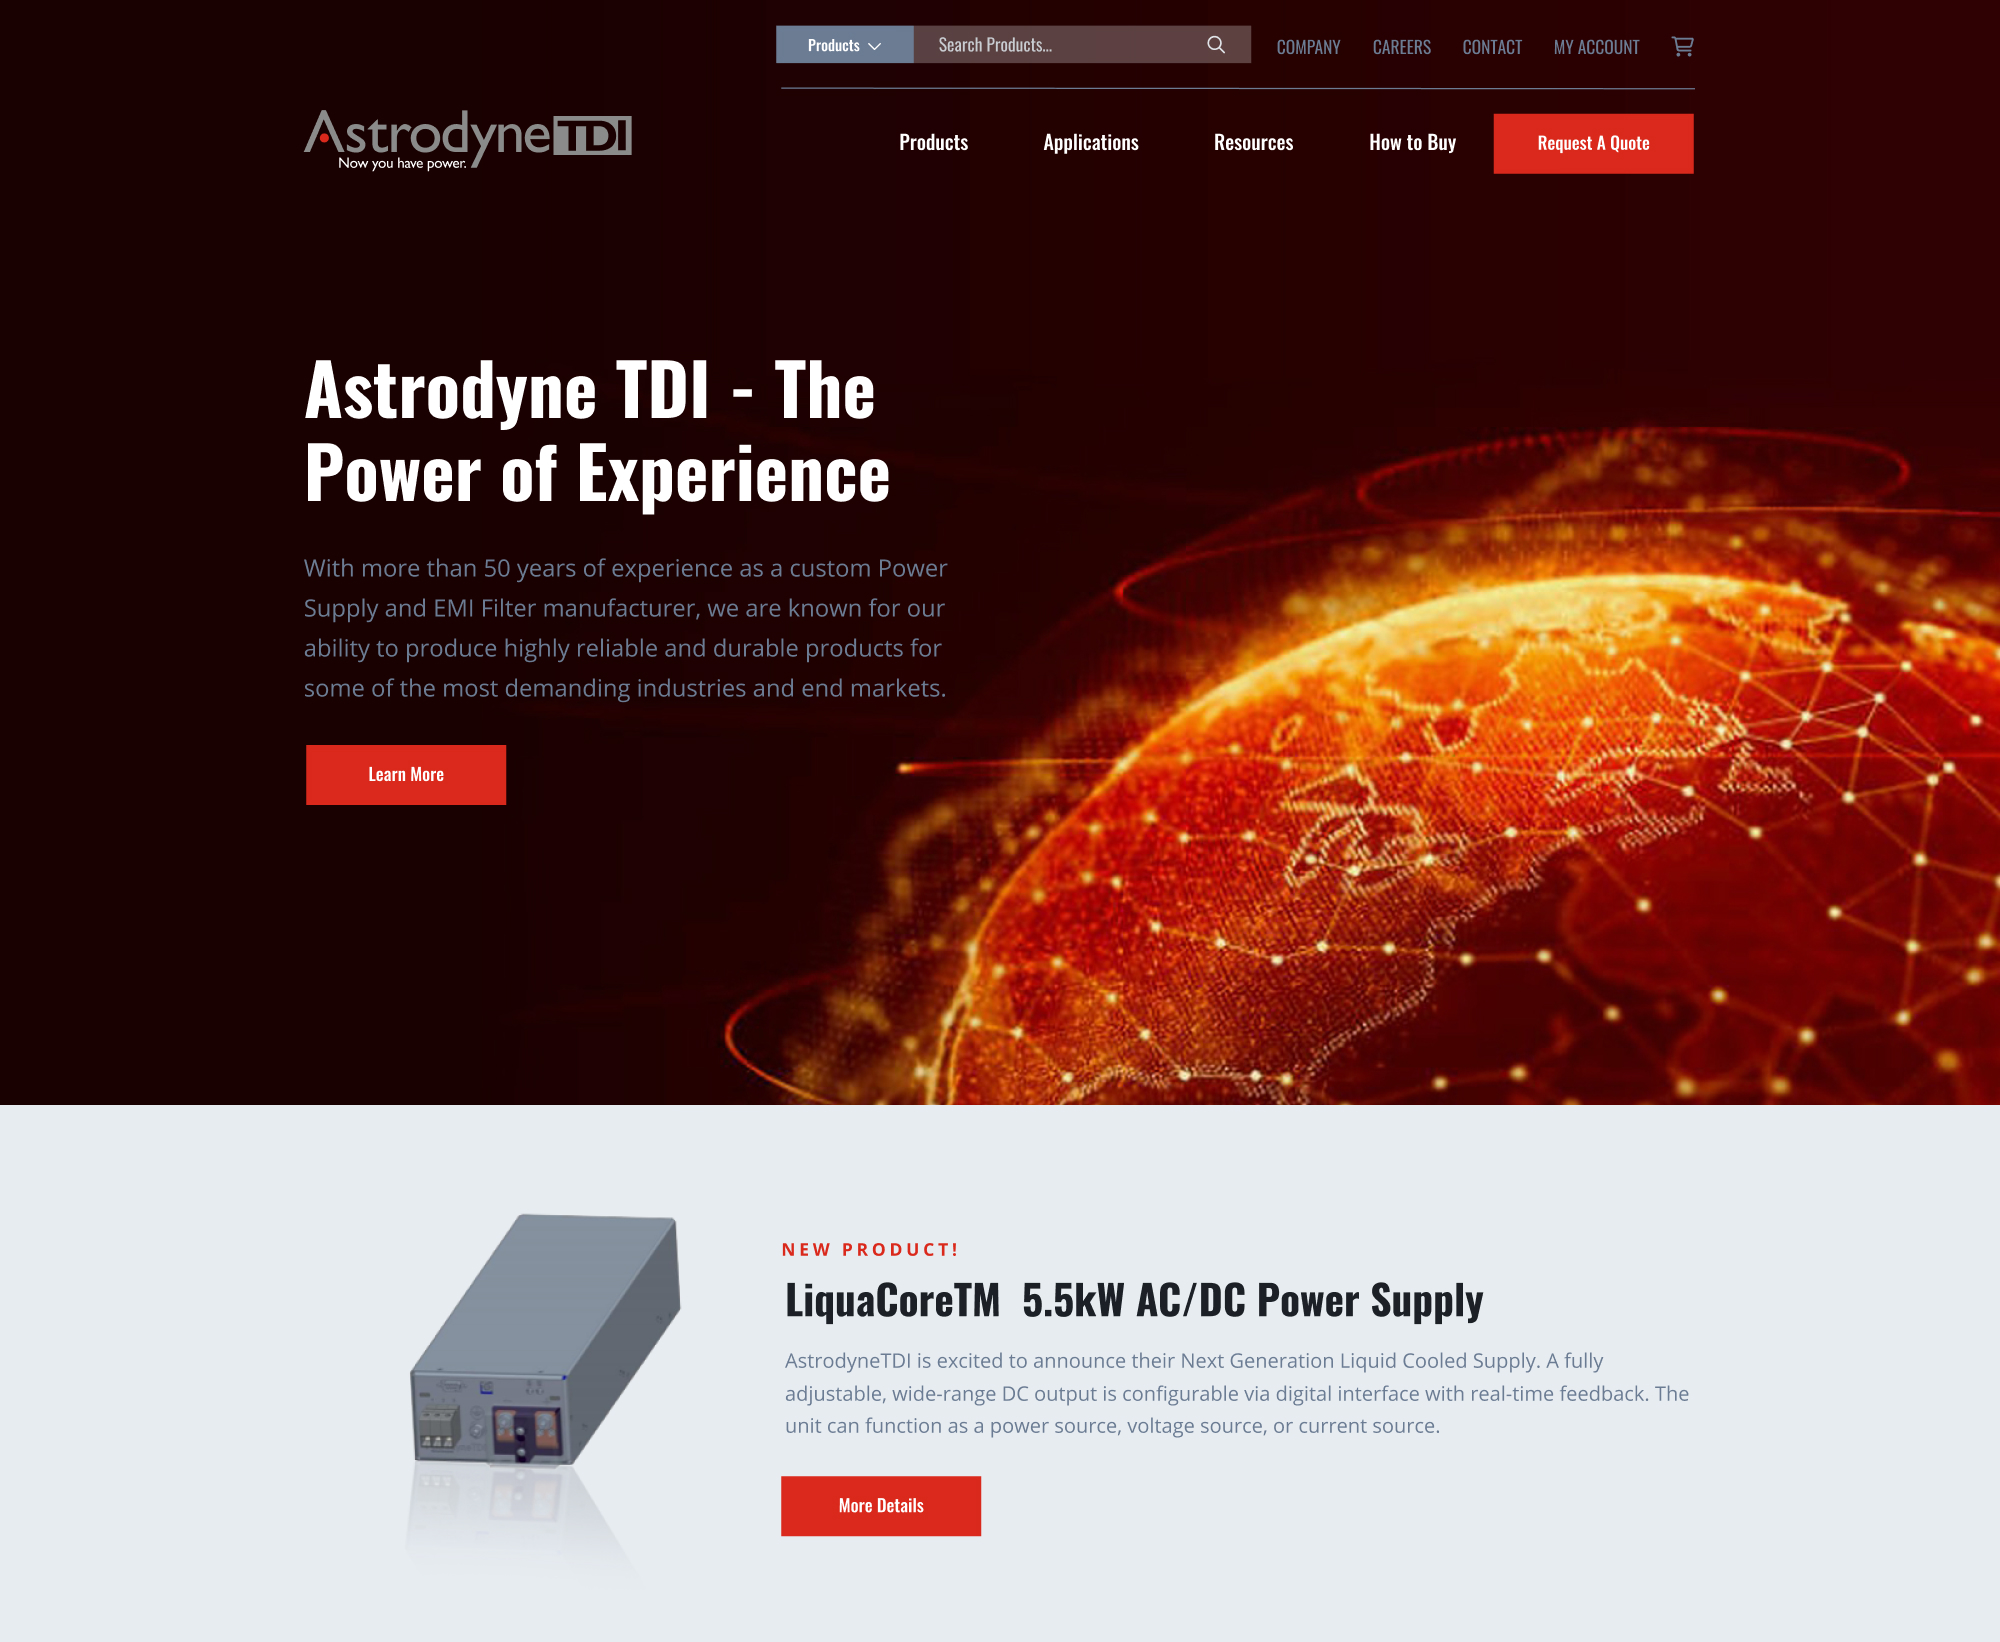 AstrodyneTDI designs